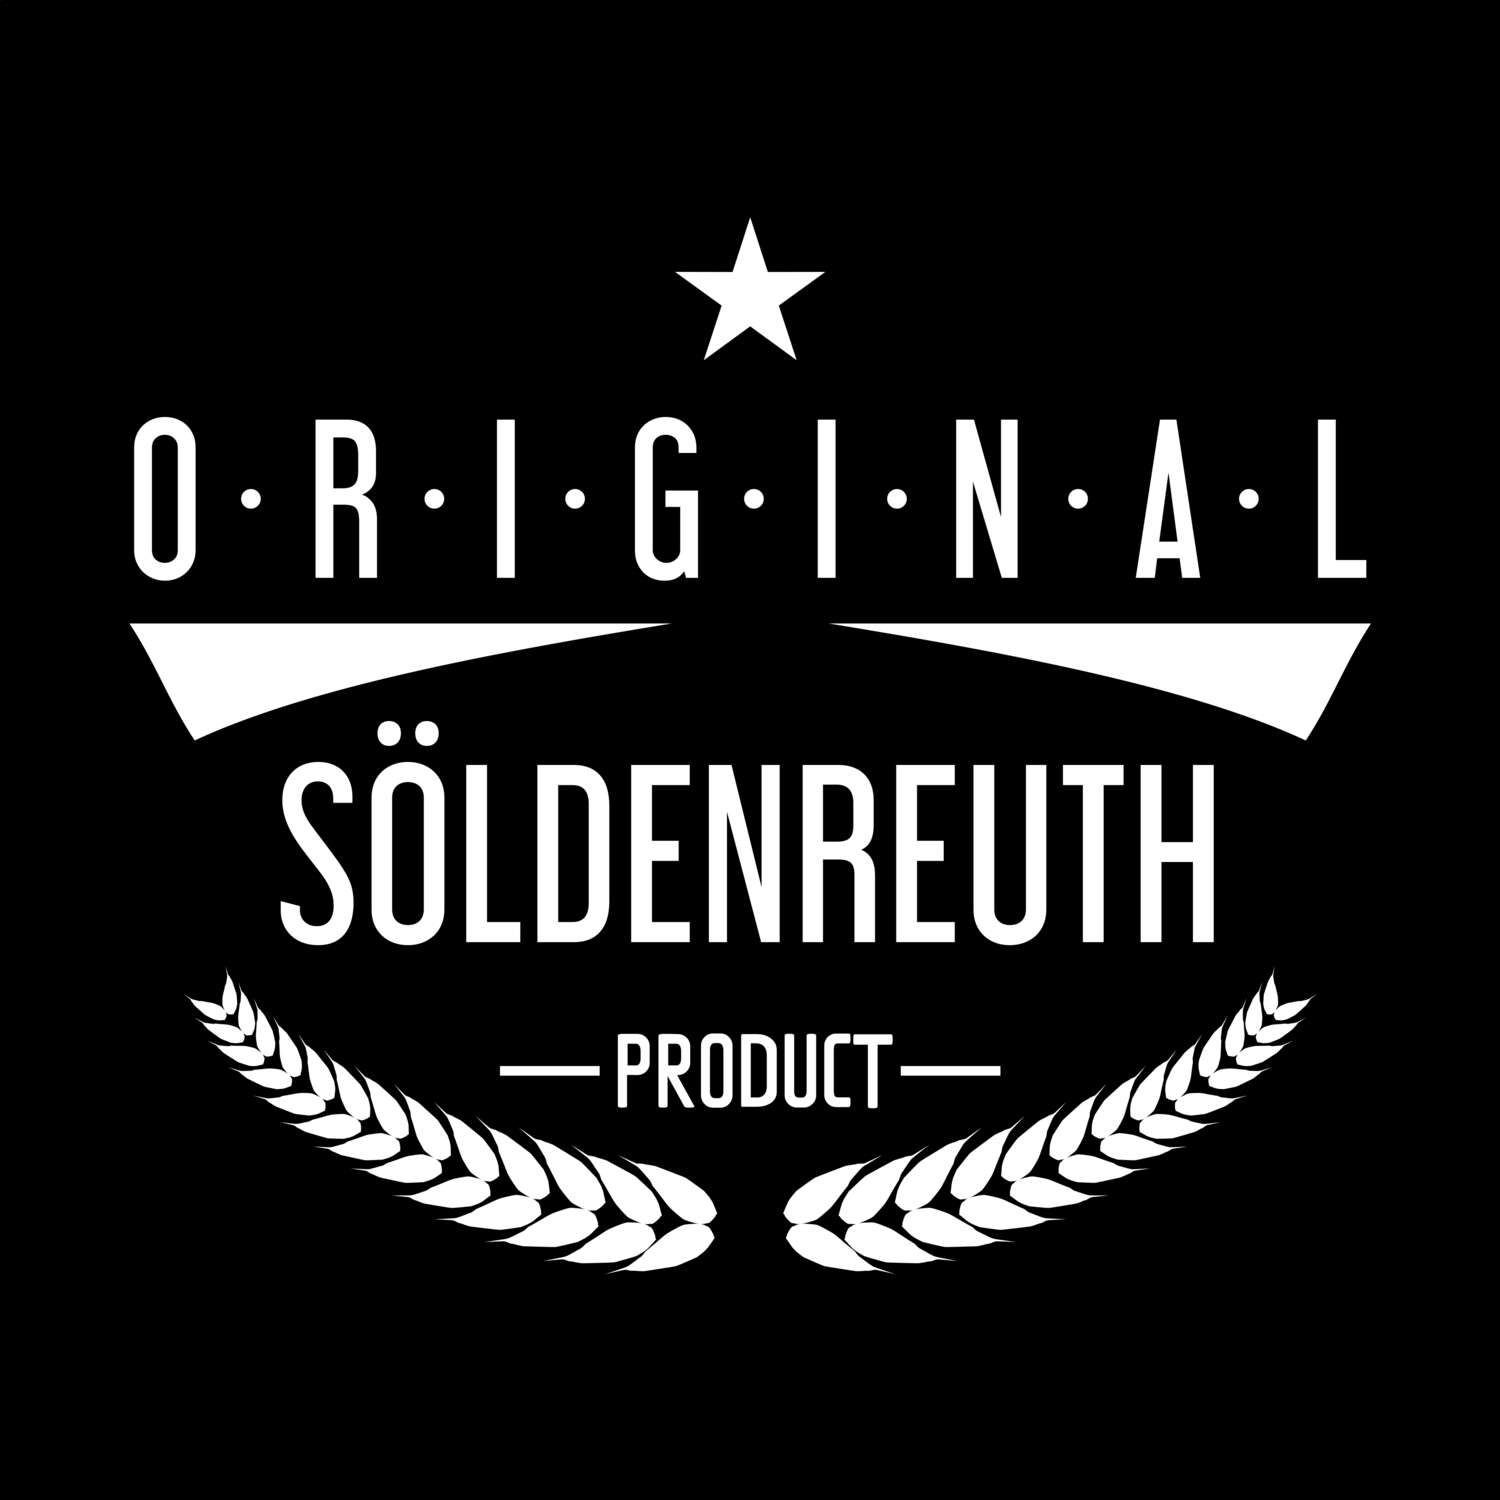 Söldenreuth T-Shirt »Original Product«